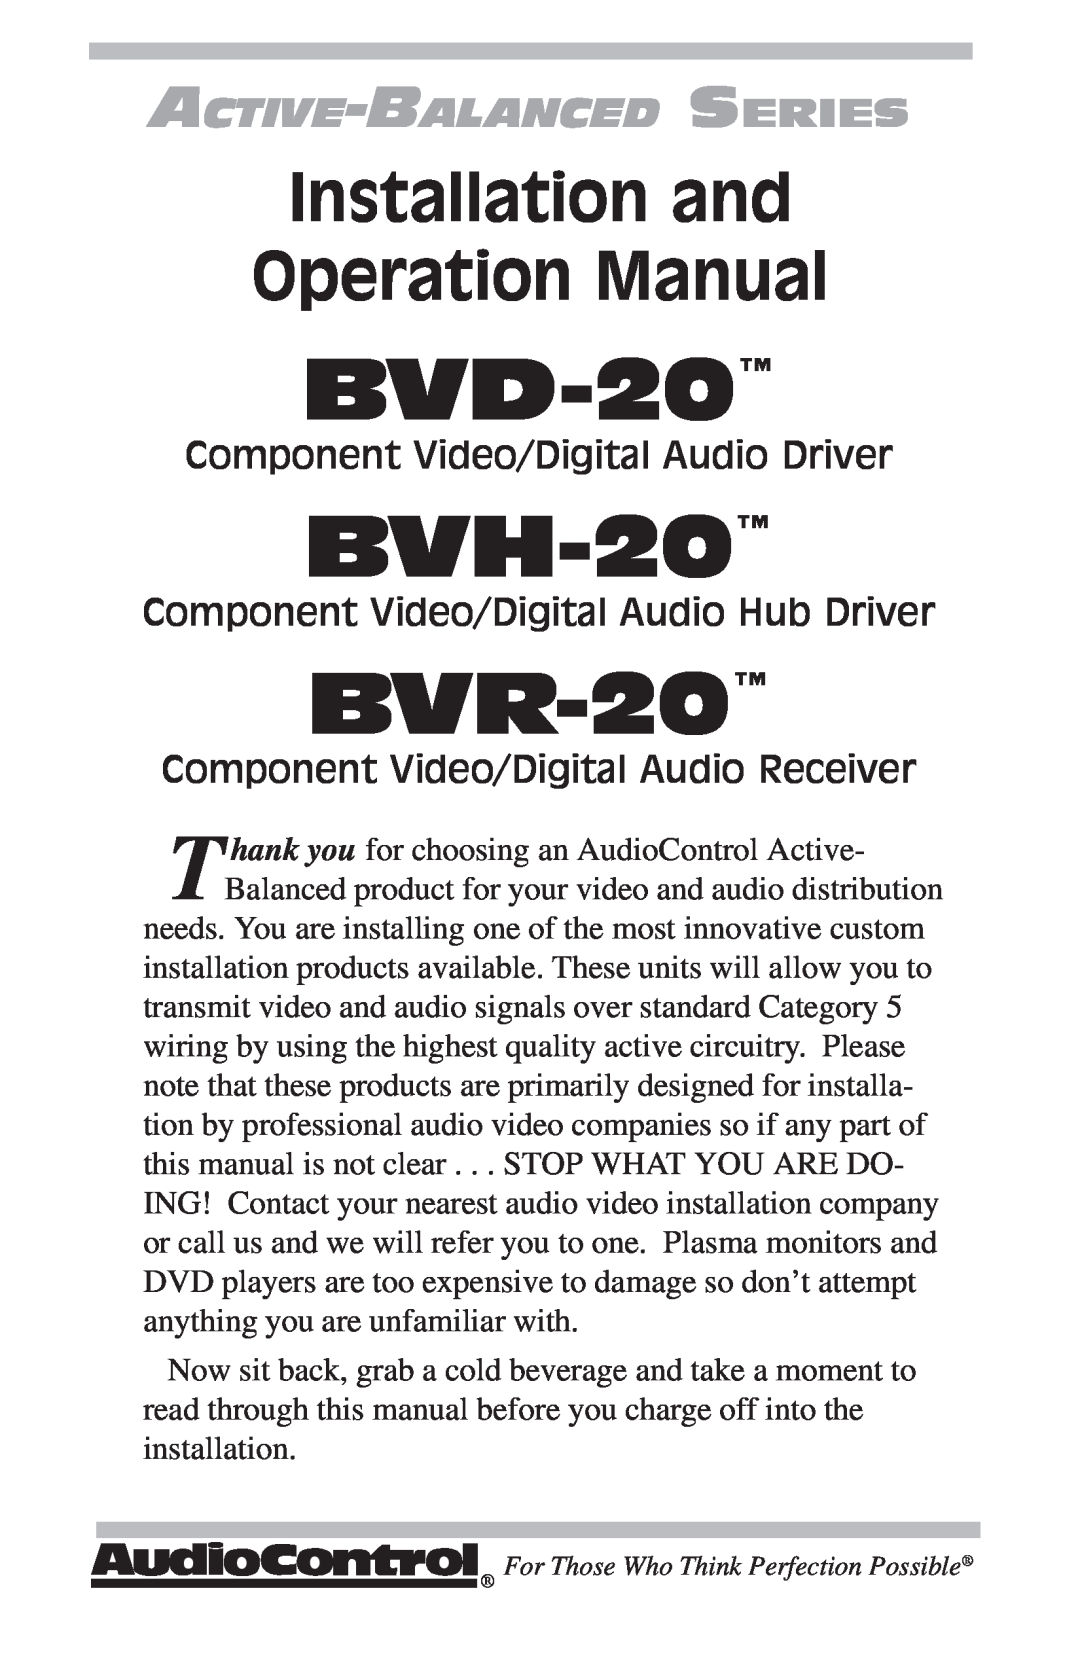 HomeTech BVR-20 operation manual Component Video/Digital Audio Driver, Component Video/Digital Audio Hub Driver, BVD-20 